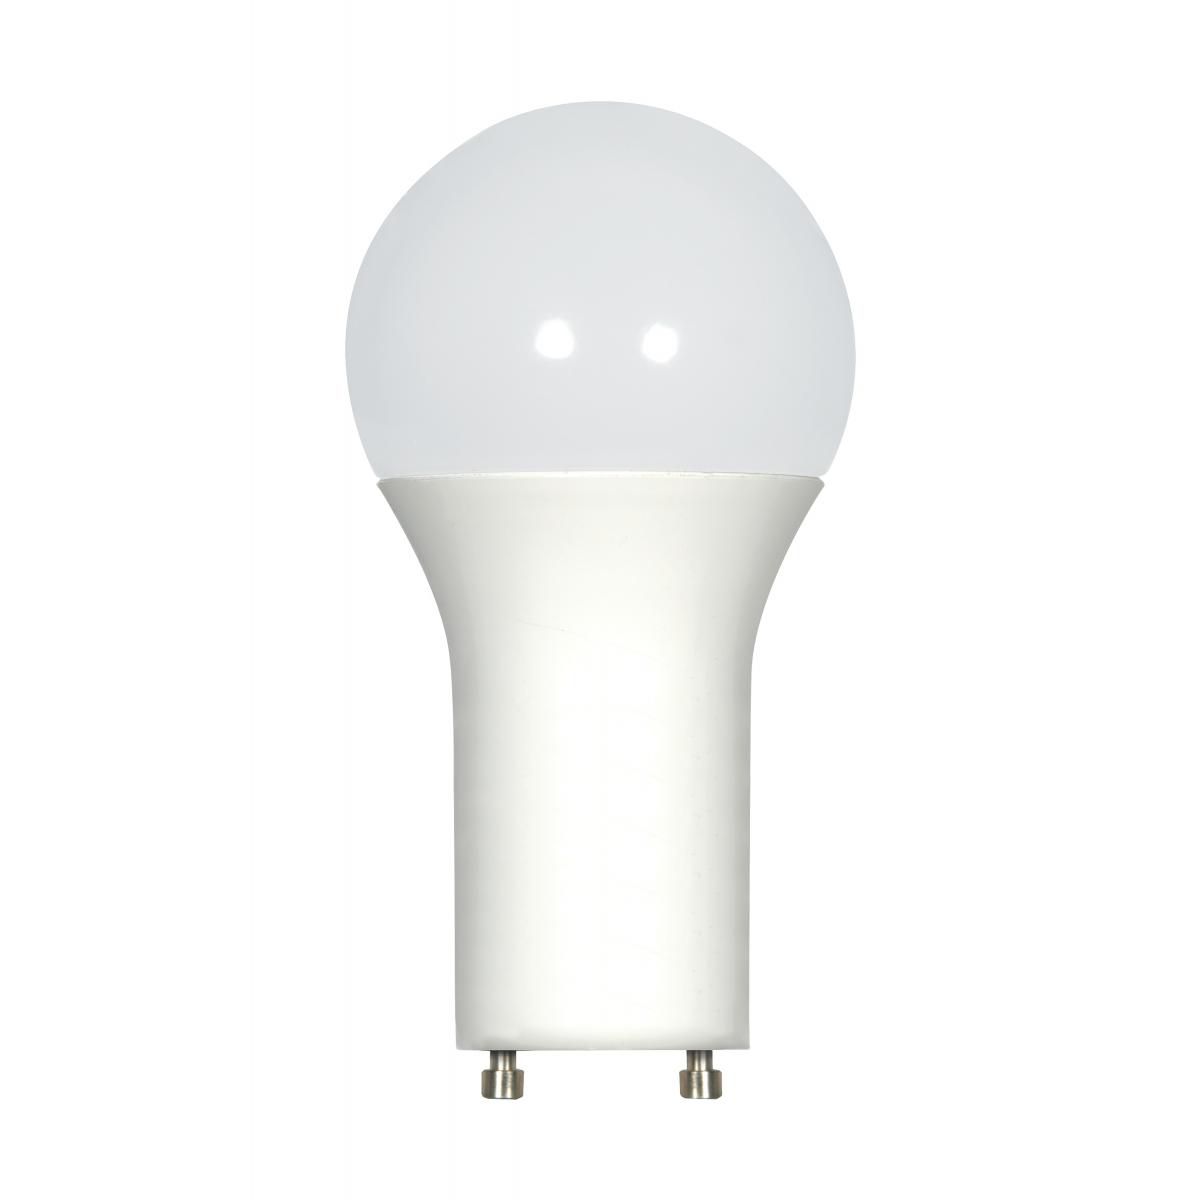 A19 LED Bulb, 100W Equivalent, 17 Watt, 1600 Lumens, 2700K, GU24 Base, Frosted Finish